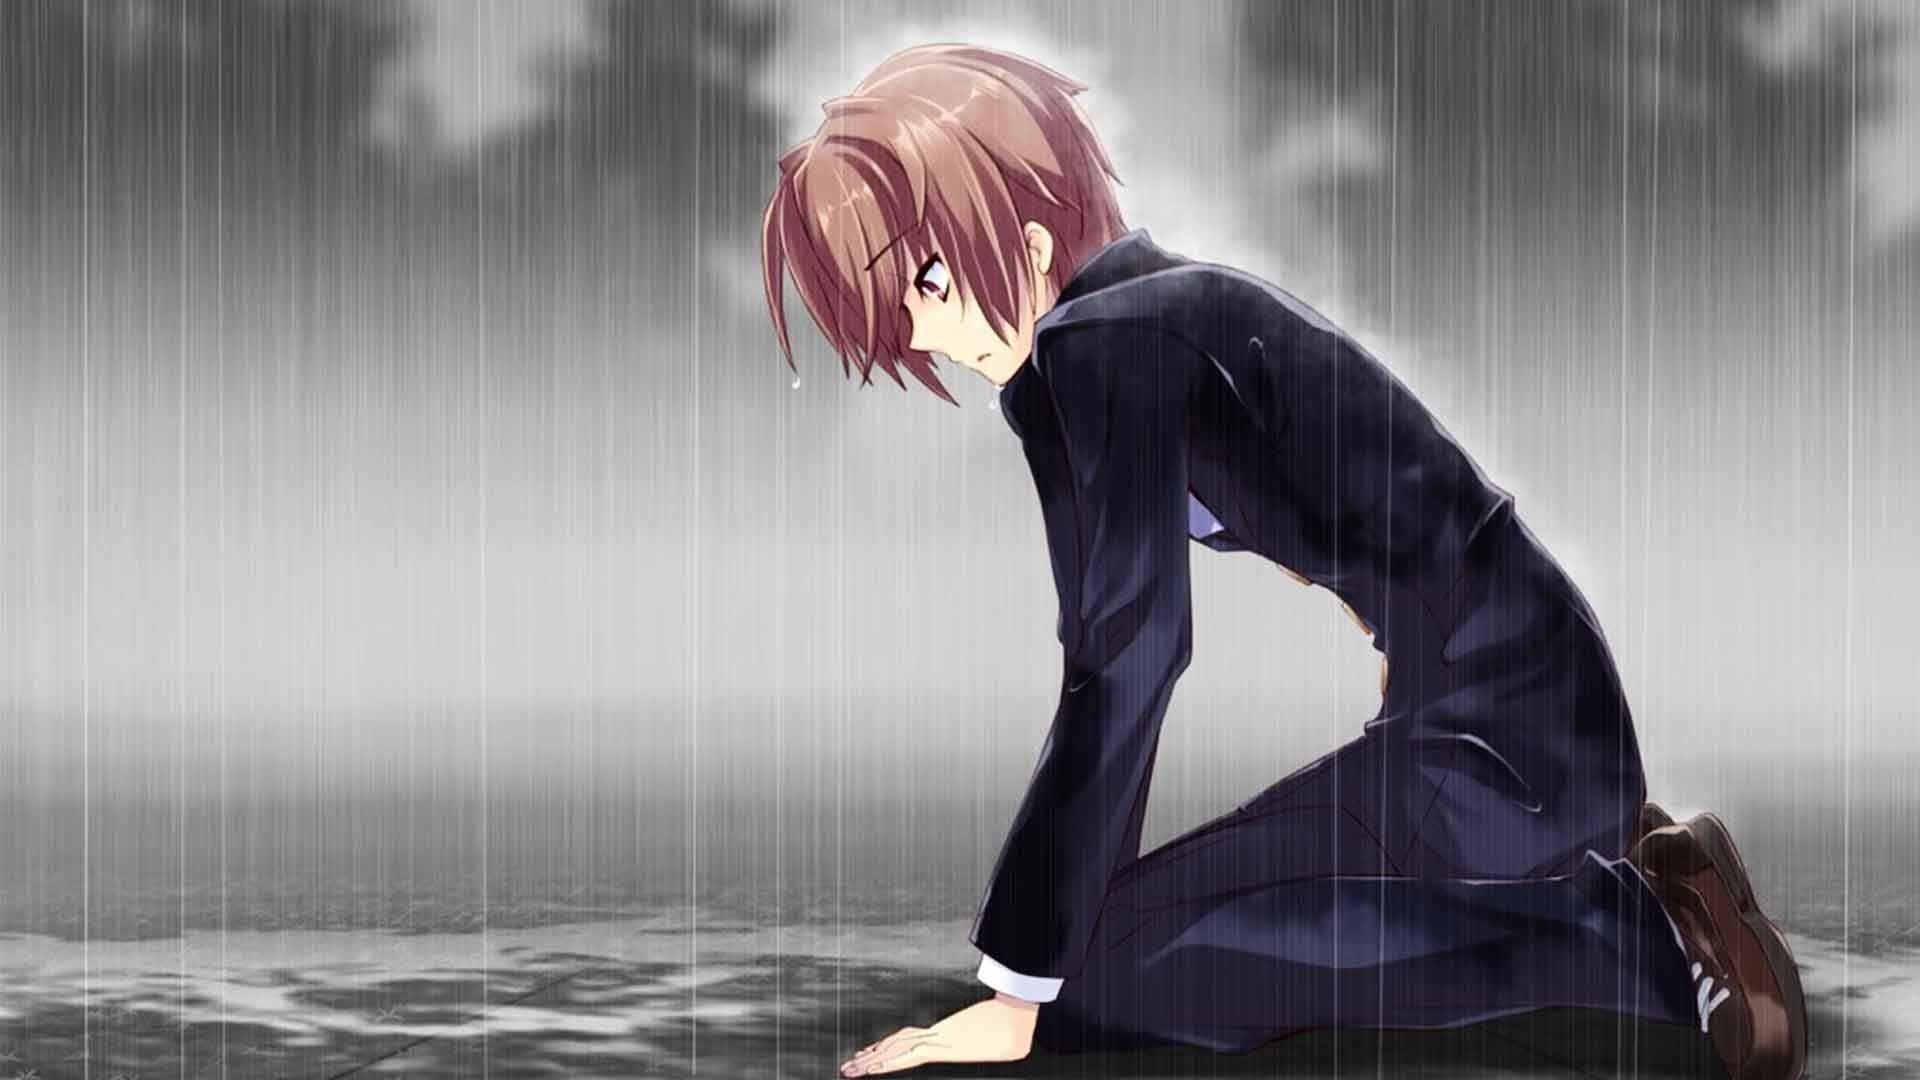 Sad Anime Boy Wallpaper background picture